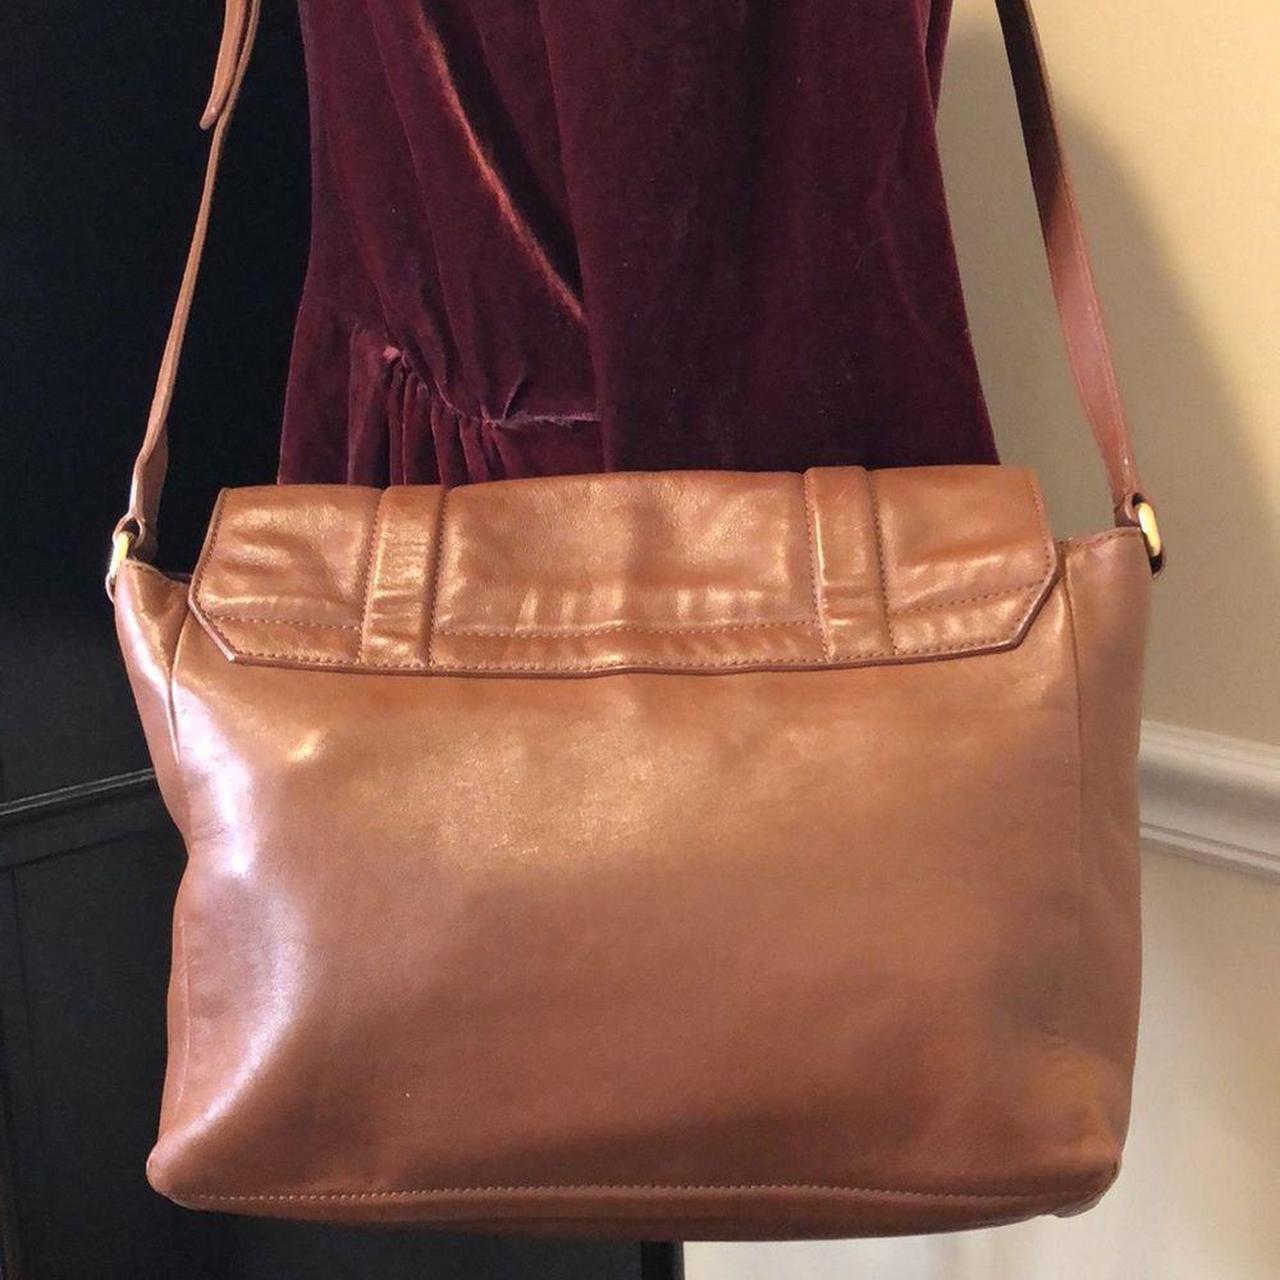 Authentic Chanel Precision Bag Very popular trendy - Depop  Marc jacobs crossbody  bag, Brown leather shoulder bag, Fashion